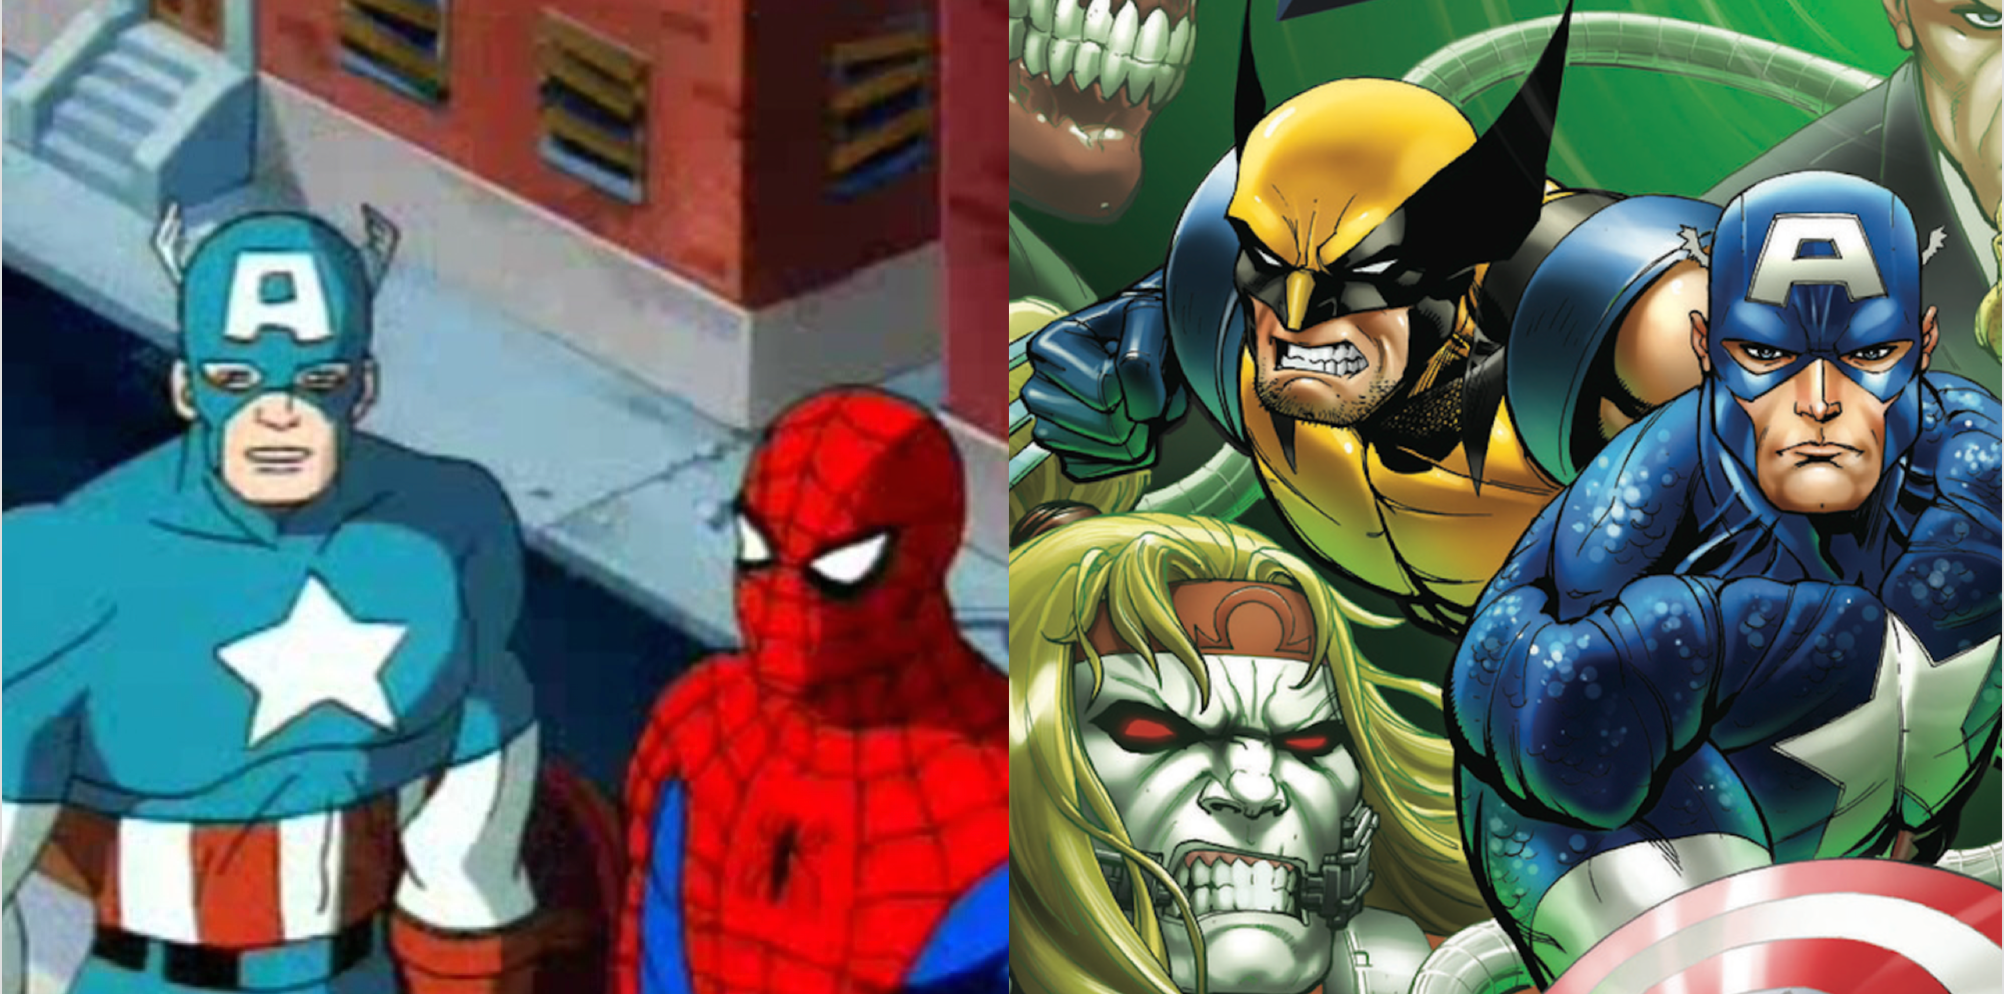 Captain America cartoon appearances